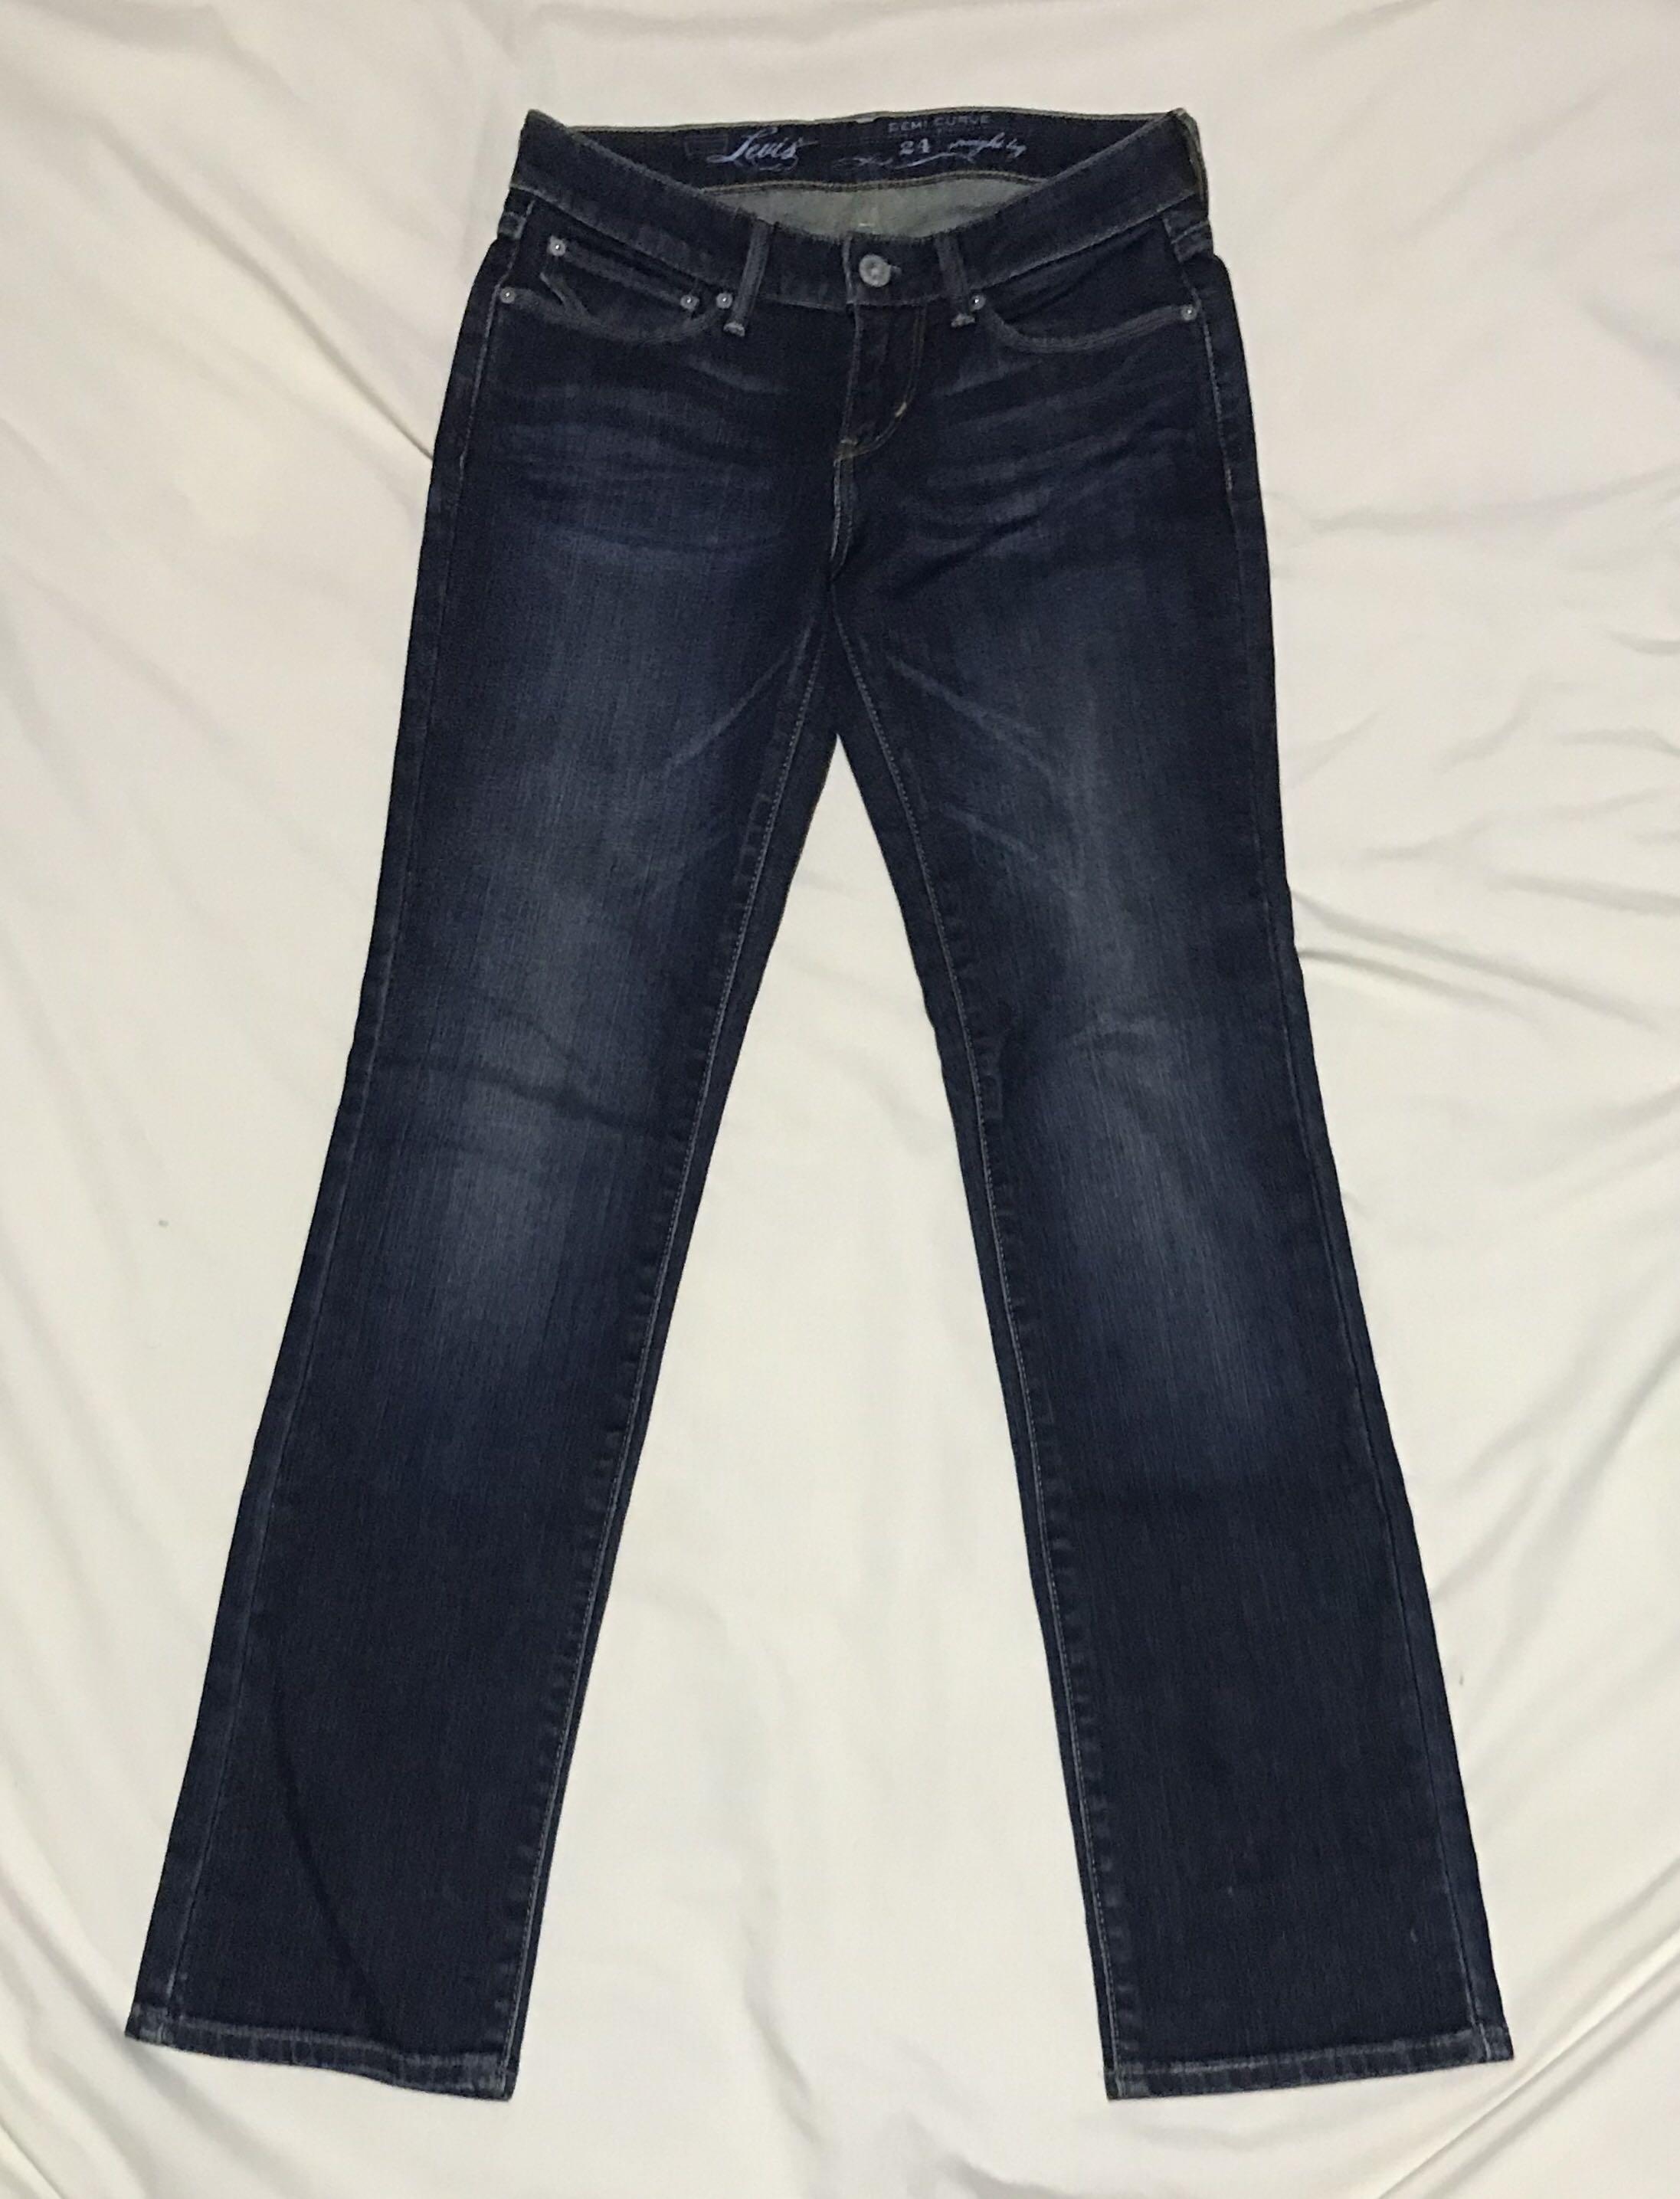 ladies jeans size 24